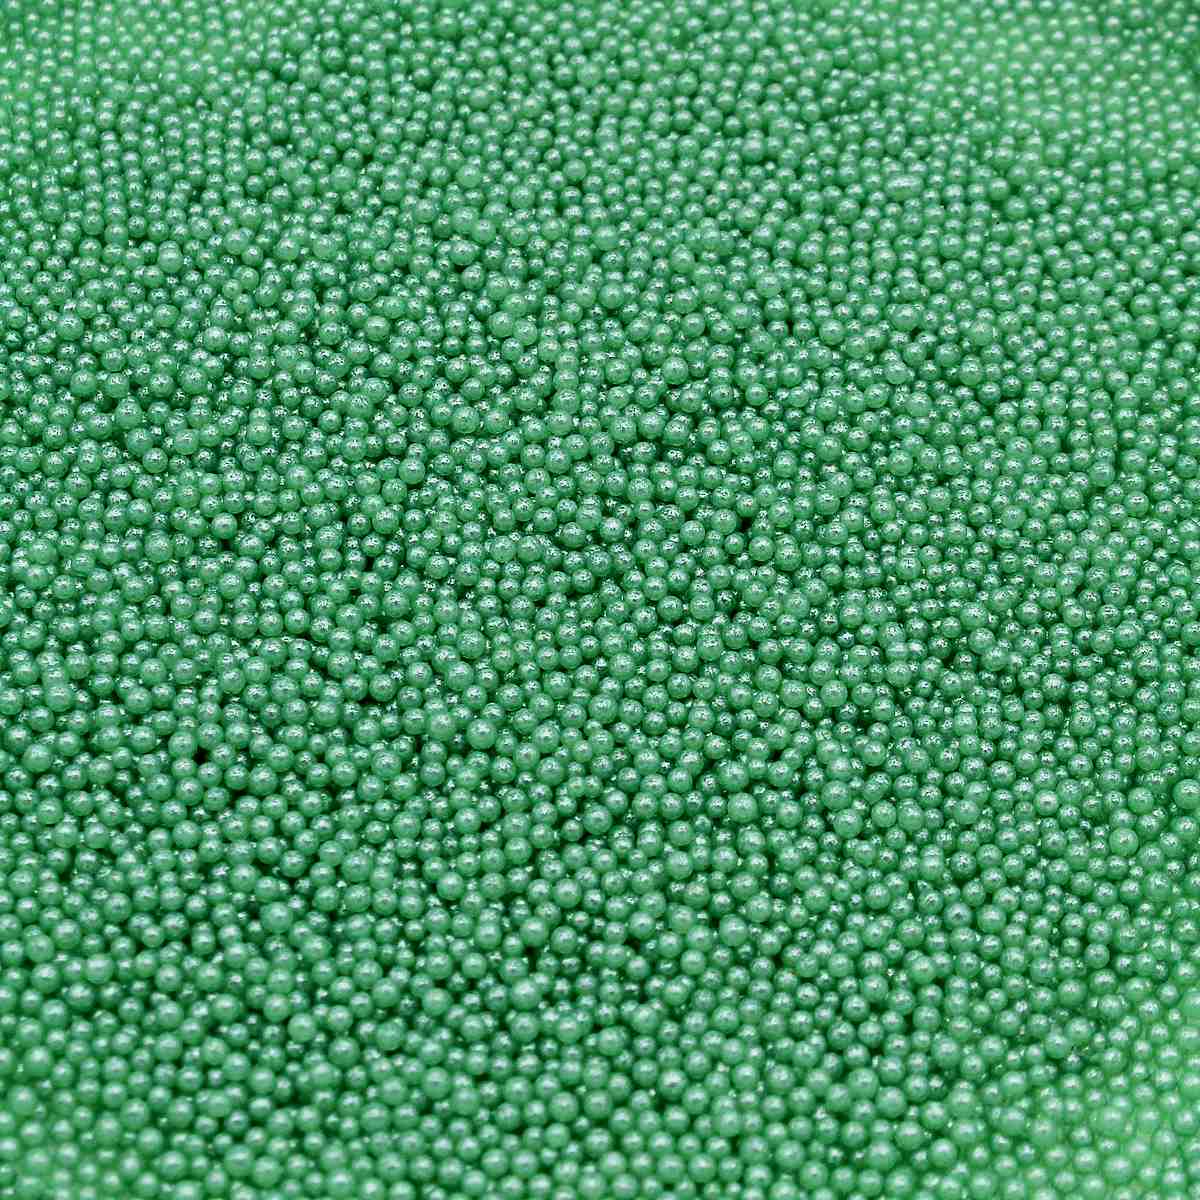 jags-mumbai Beads Micro Mini Pearl Beads 45gm Net Green